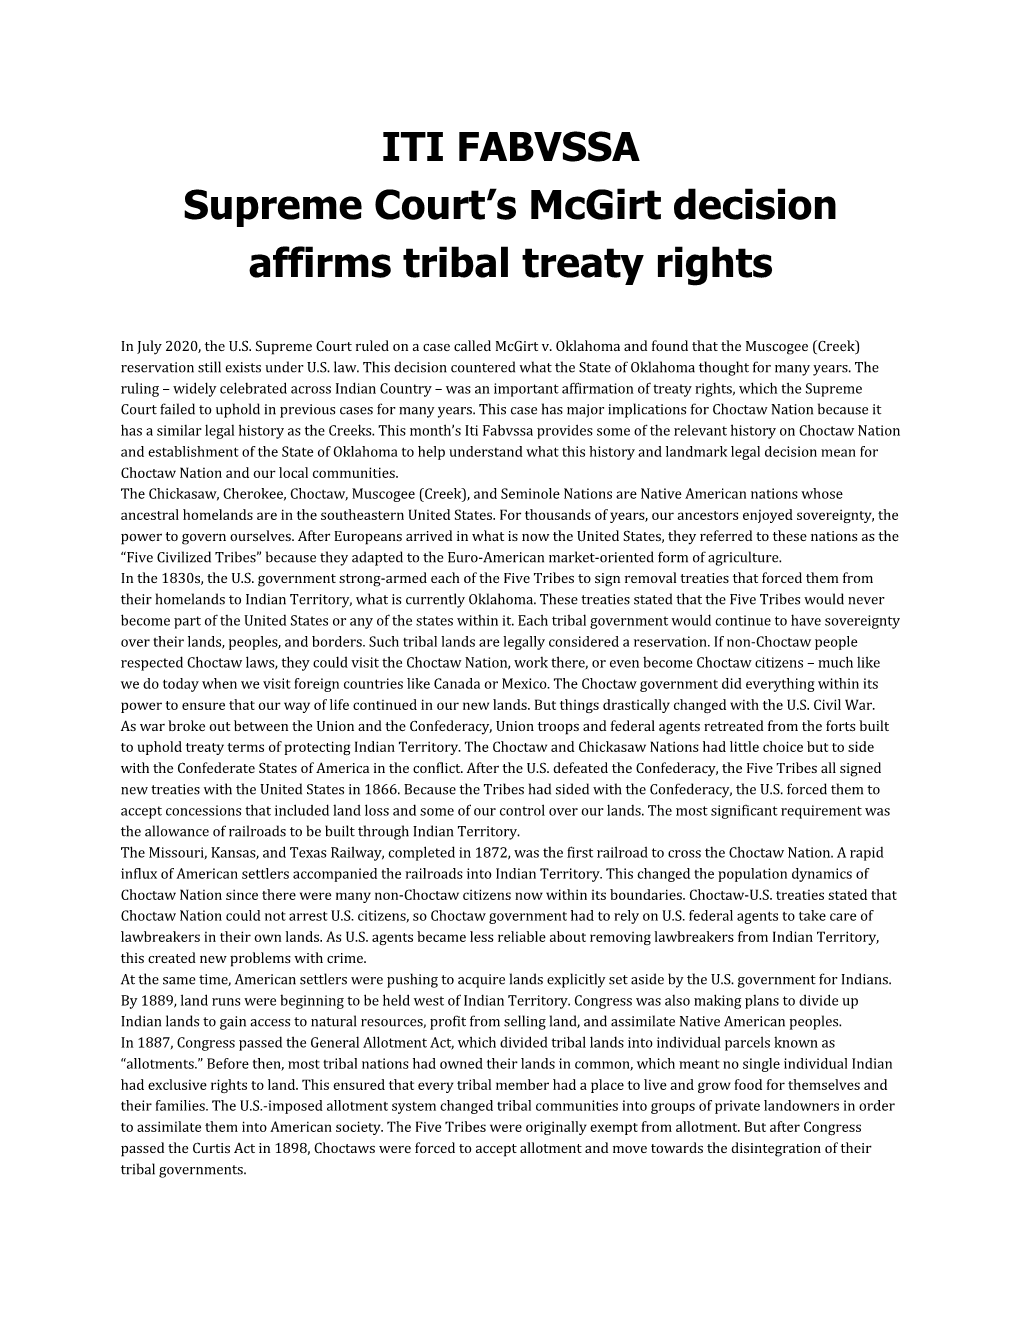 ITI FABVSSA Supreme Court's Mcgirt Decision Affirms Tribal Treaty Rights